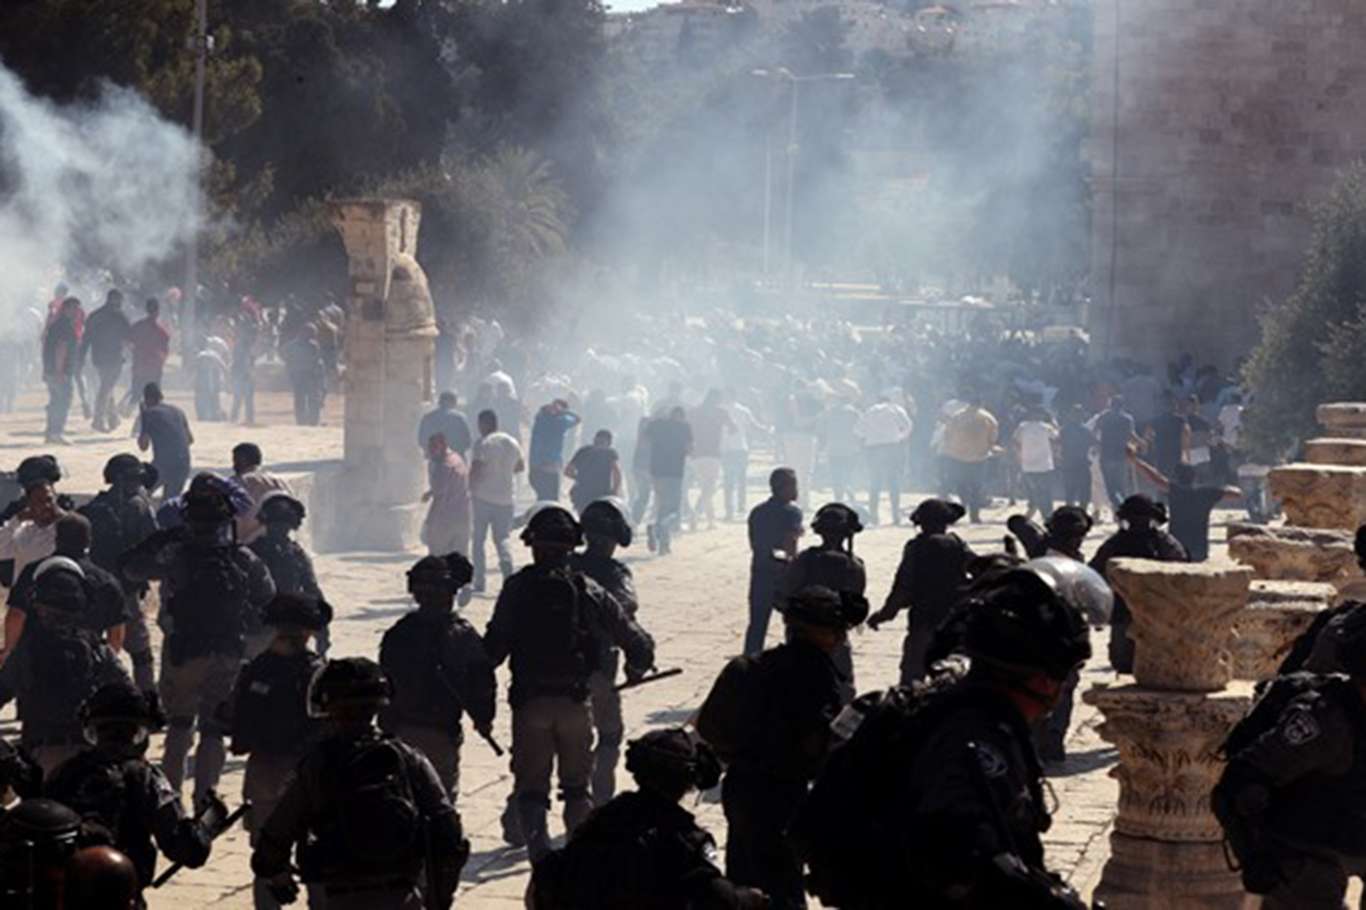 Kiswani: Israeli attack on the Aqsa Mosque “unprecedented”